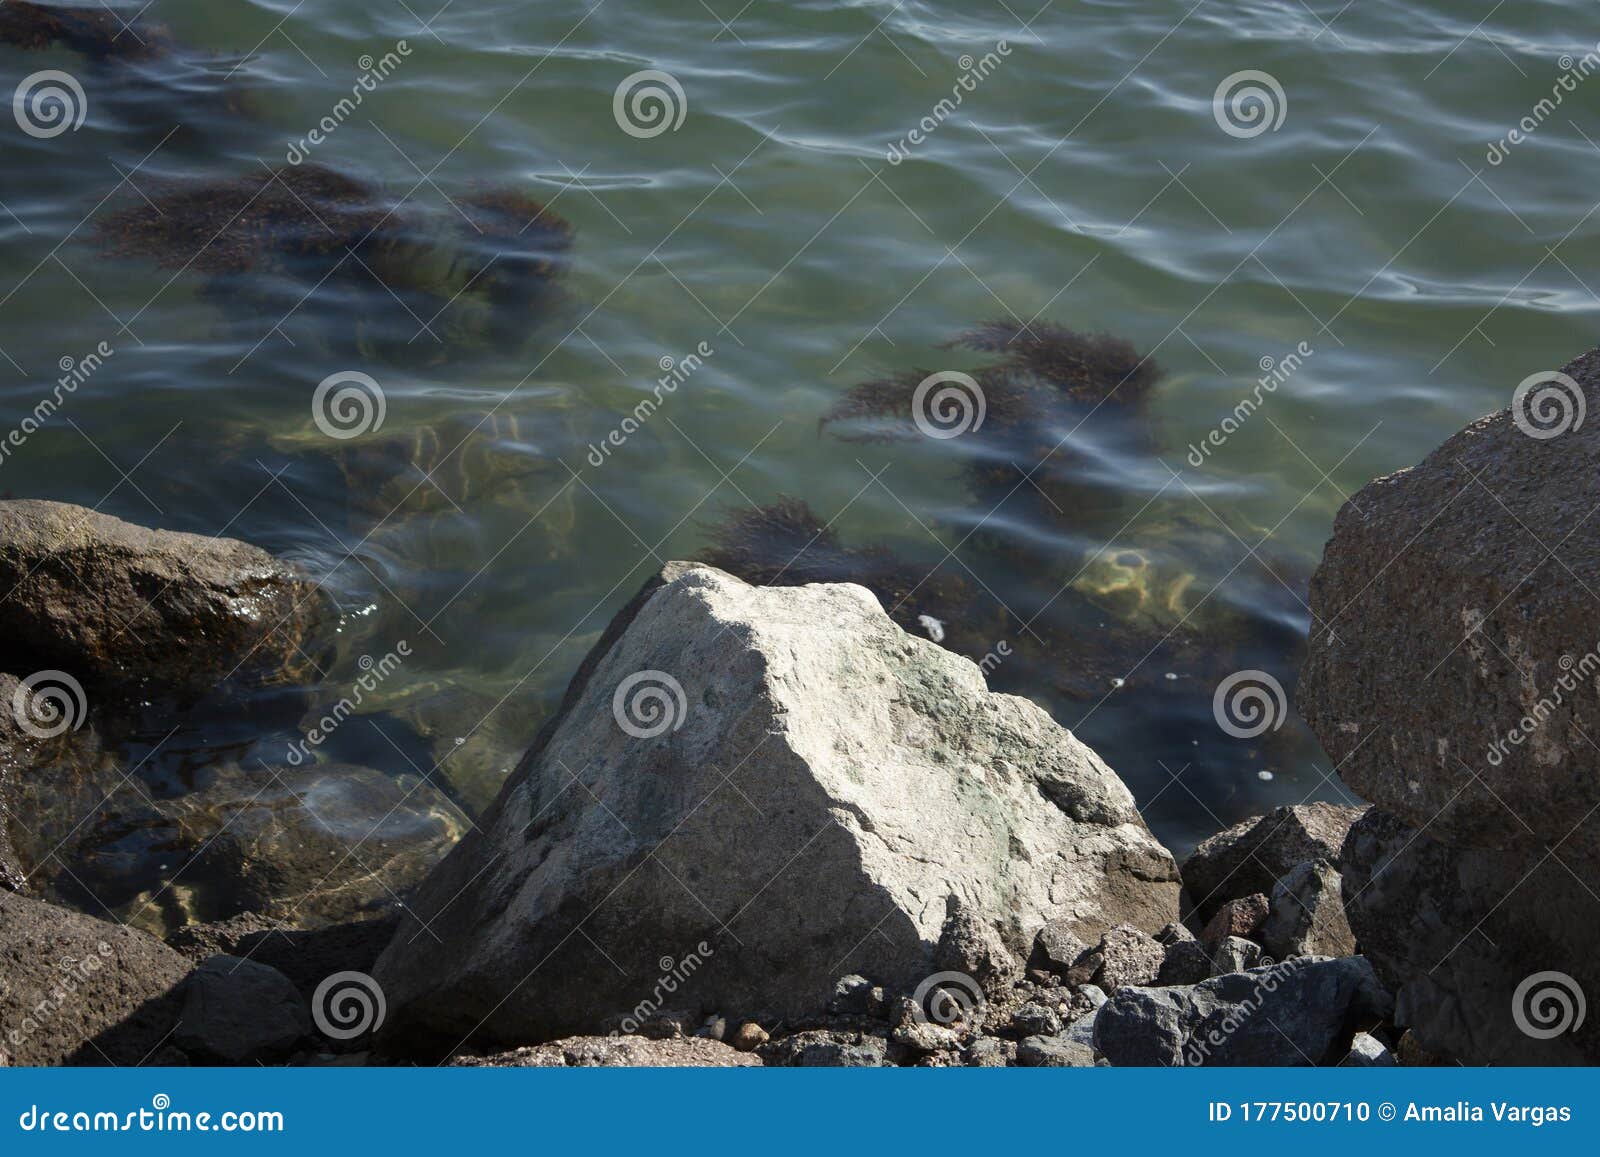 sea algae water stones and tropoical heat baja california mexico